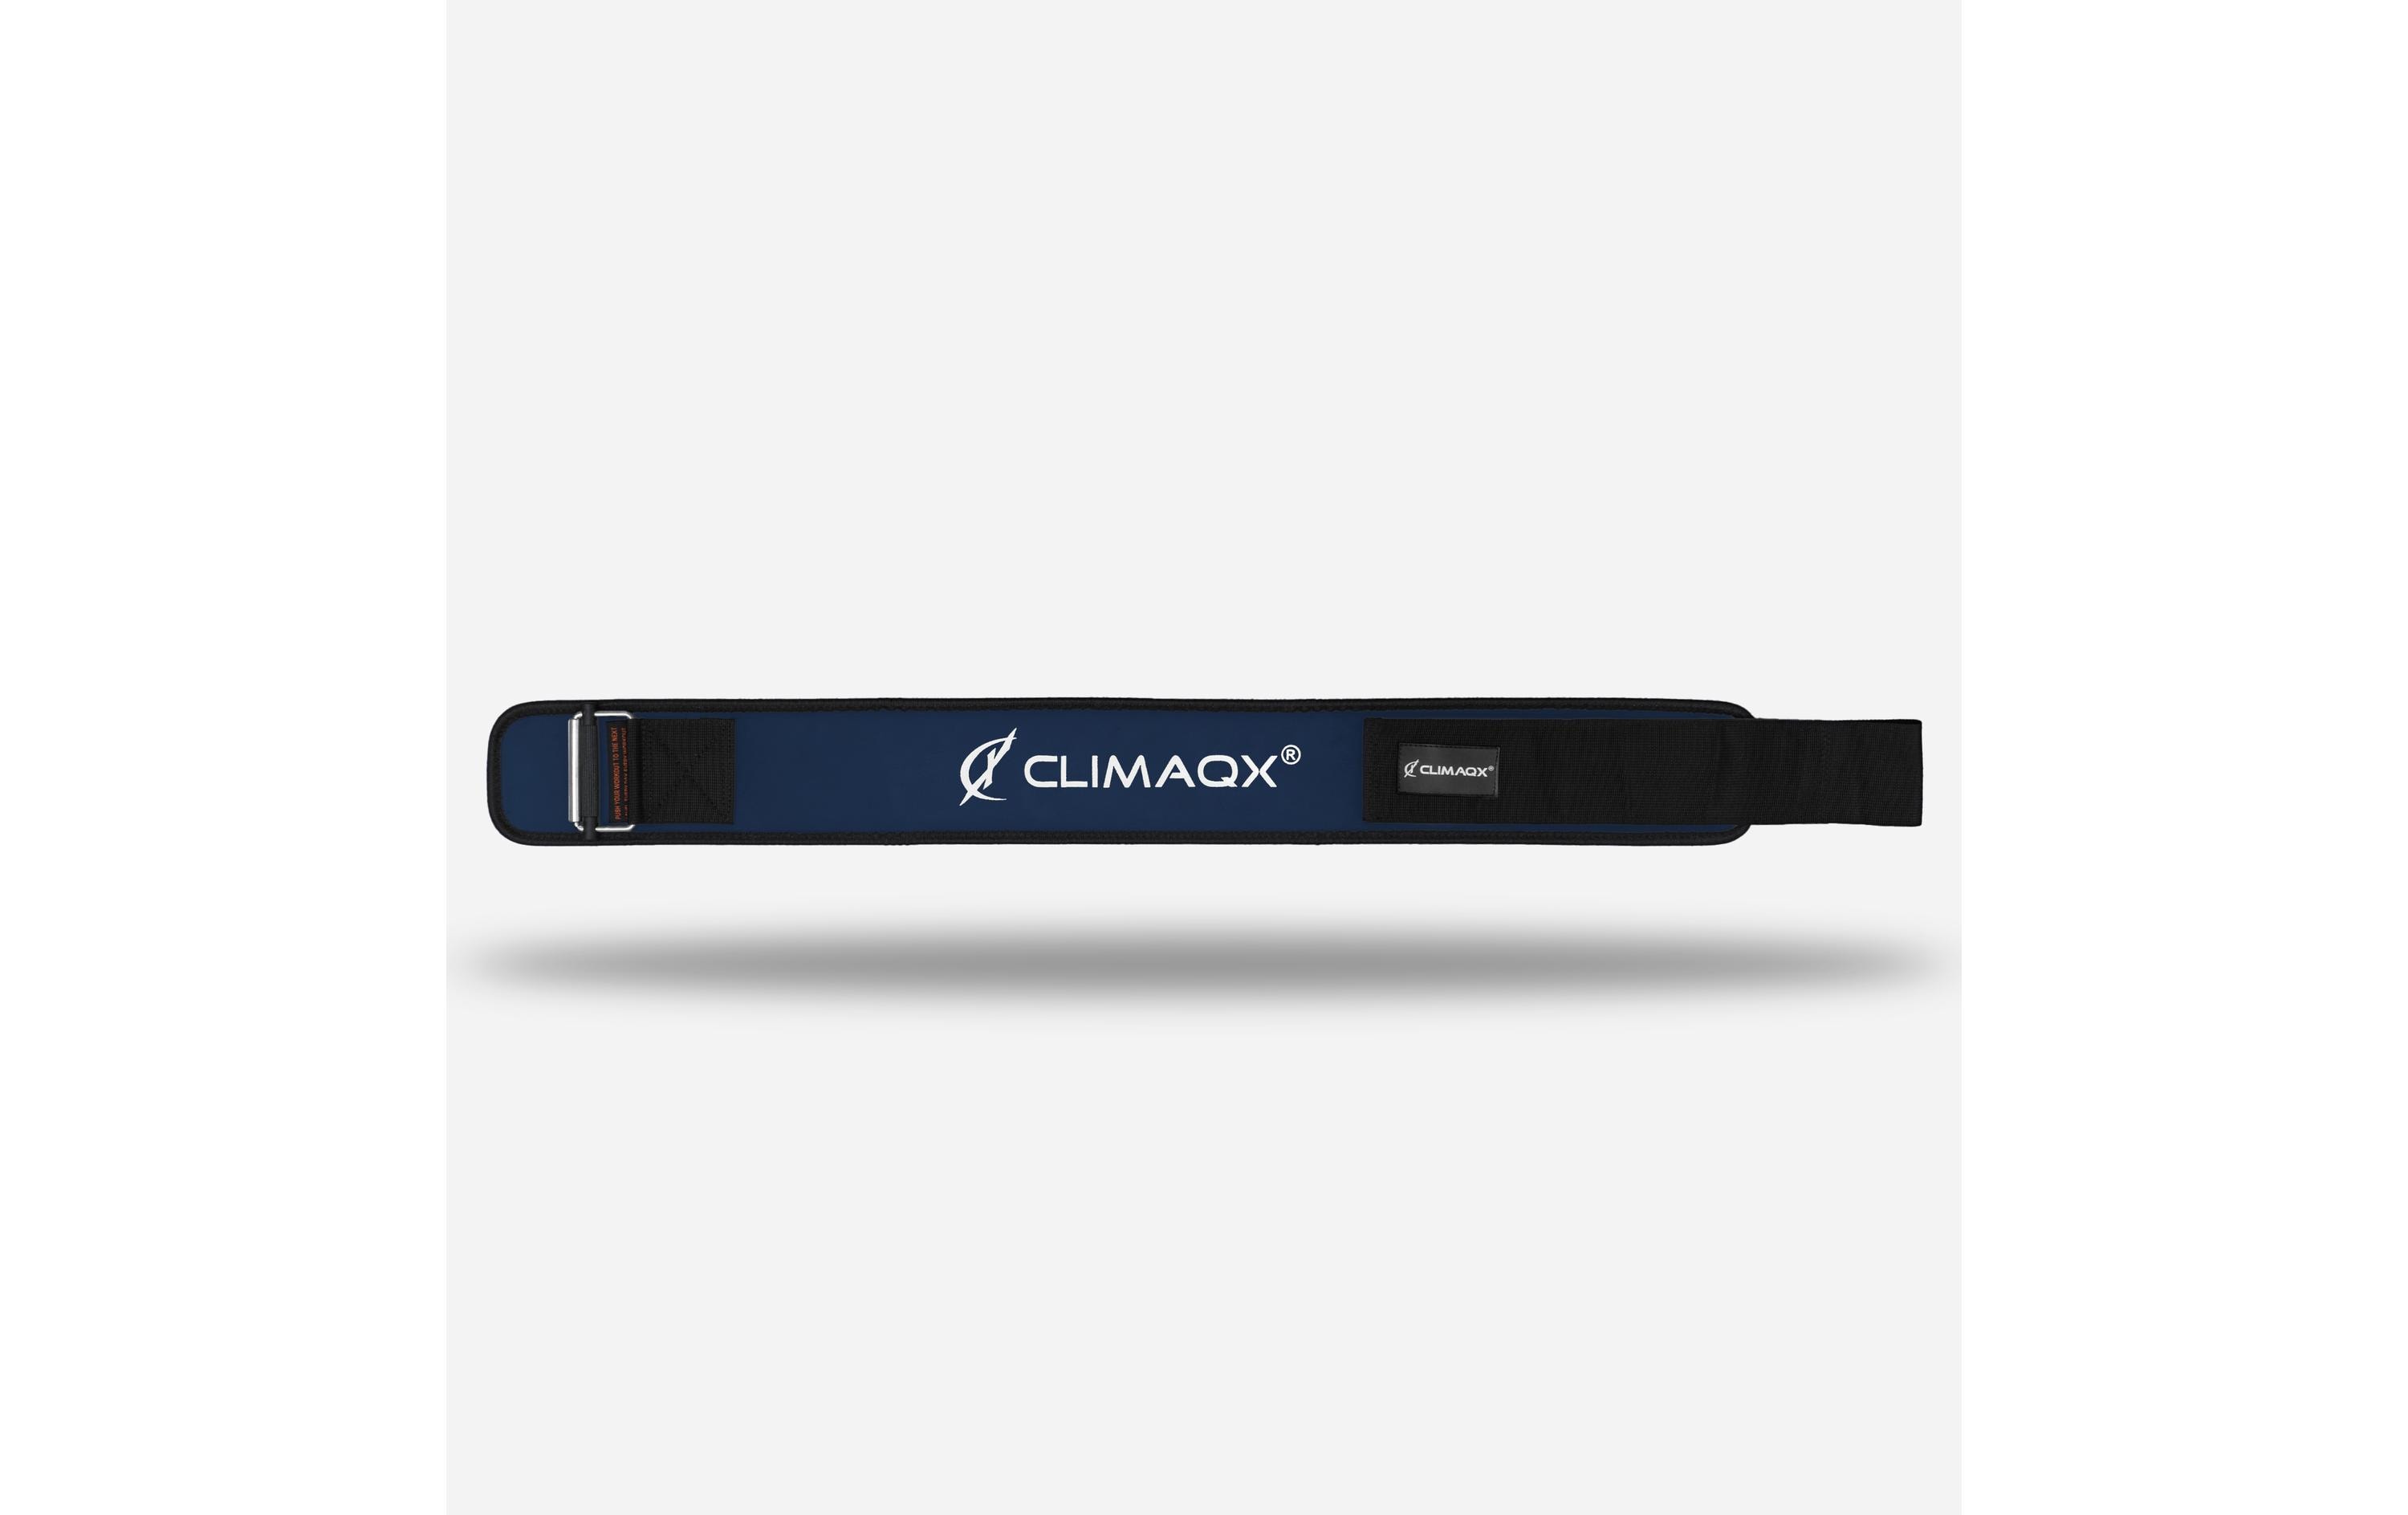 Climaqx Evolution Lifting Belt M